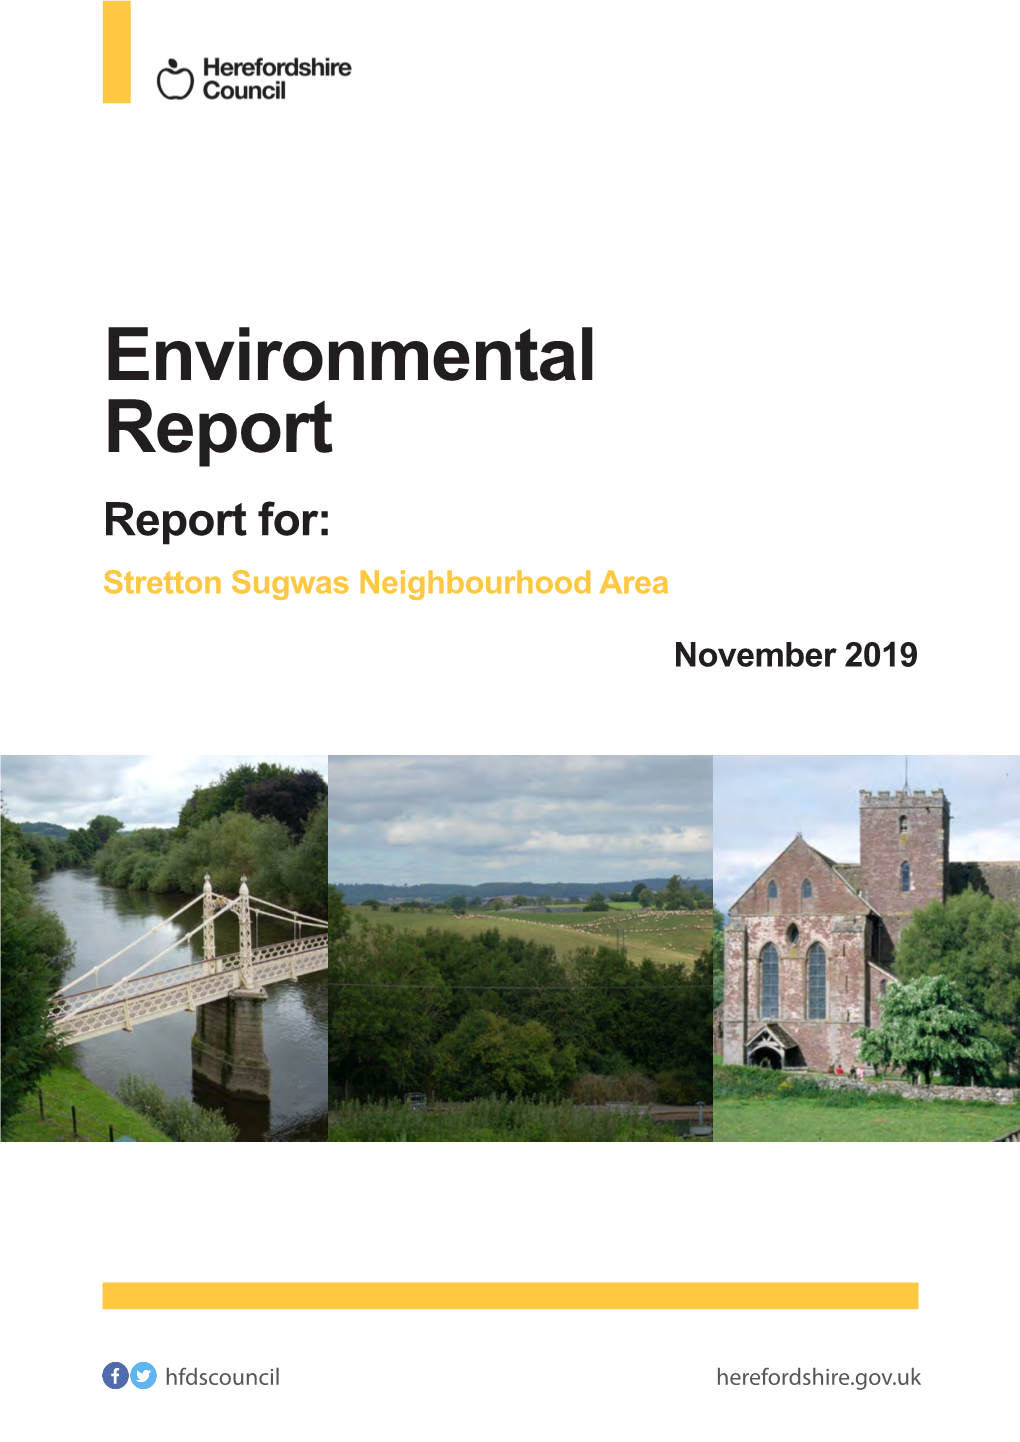 Stretton Sugwas Environmental Report November 2019